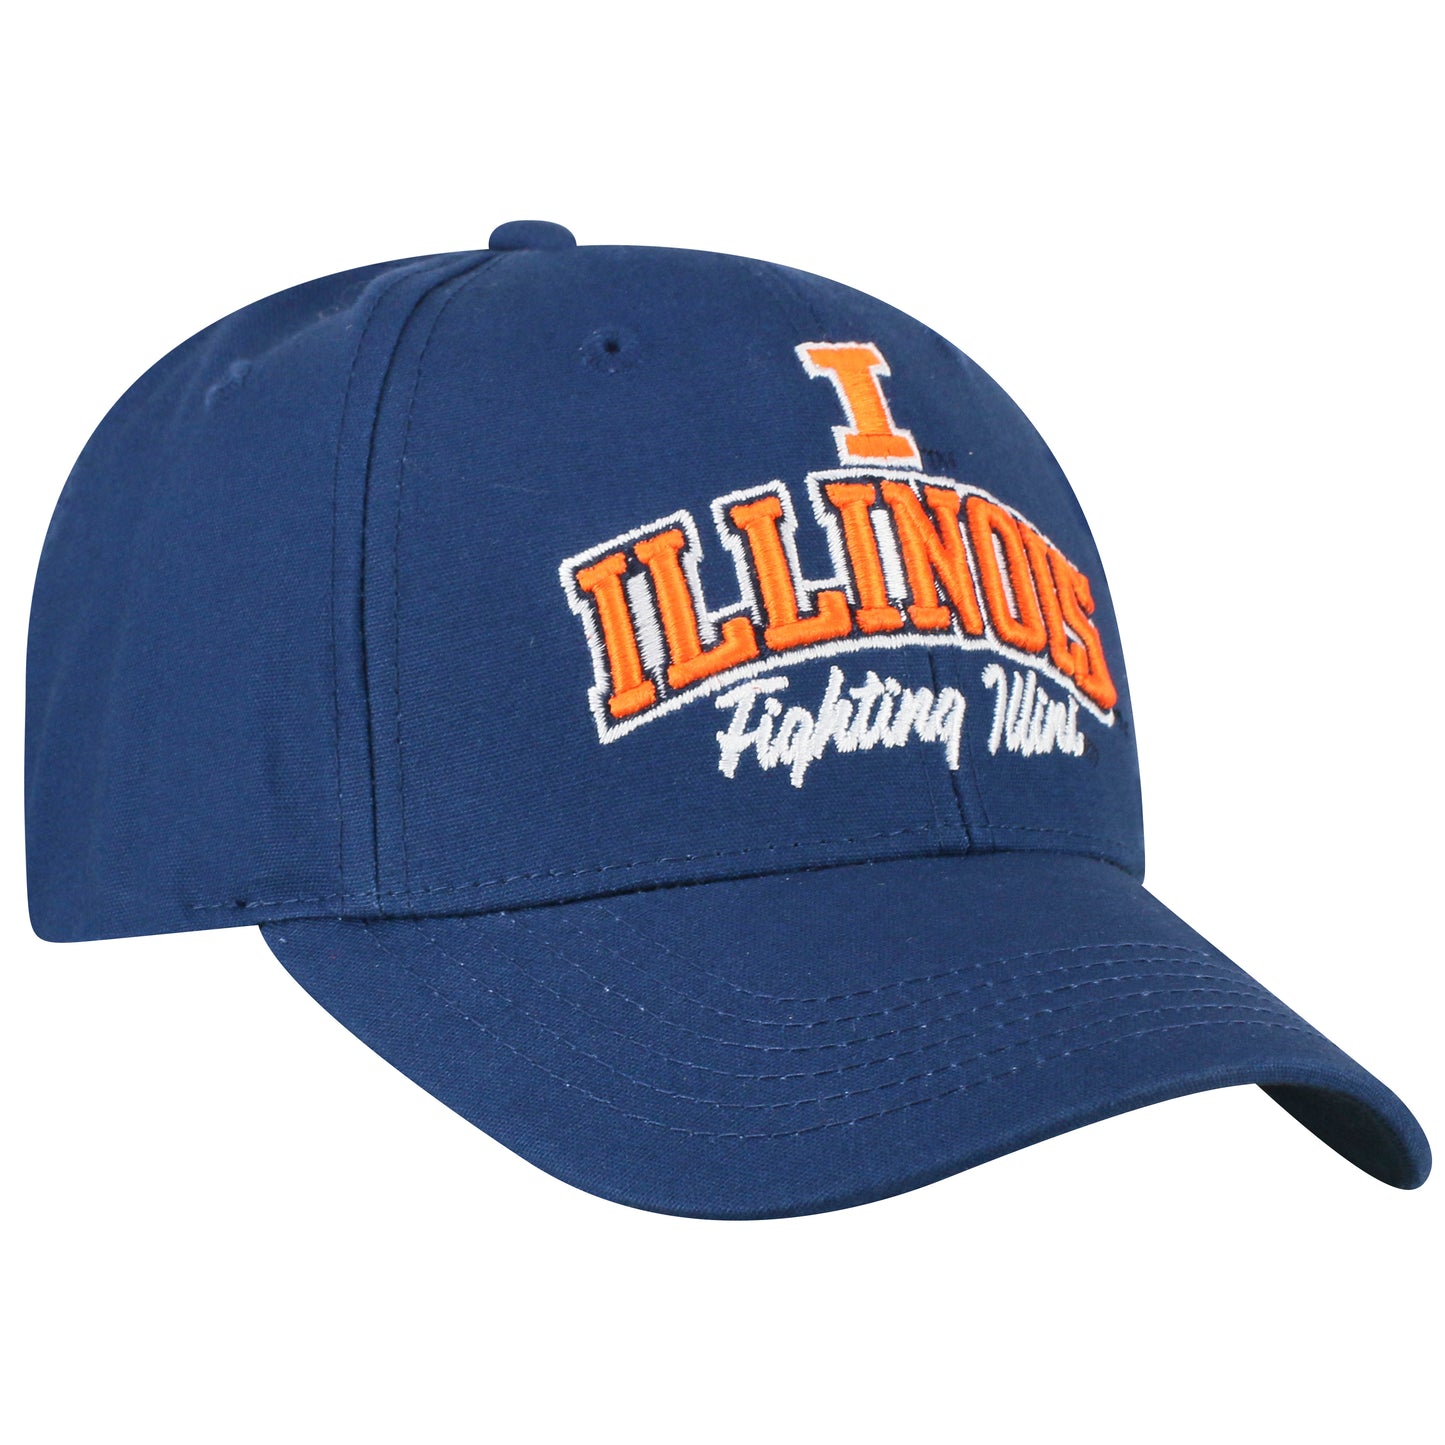 Mens Illinois Fighting Illini Advisor Adjustable Hat By Top Of The World